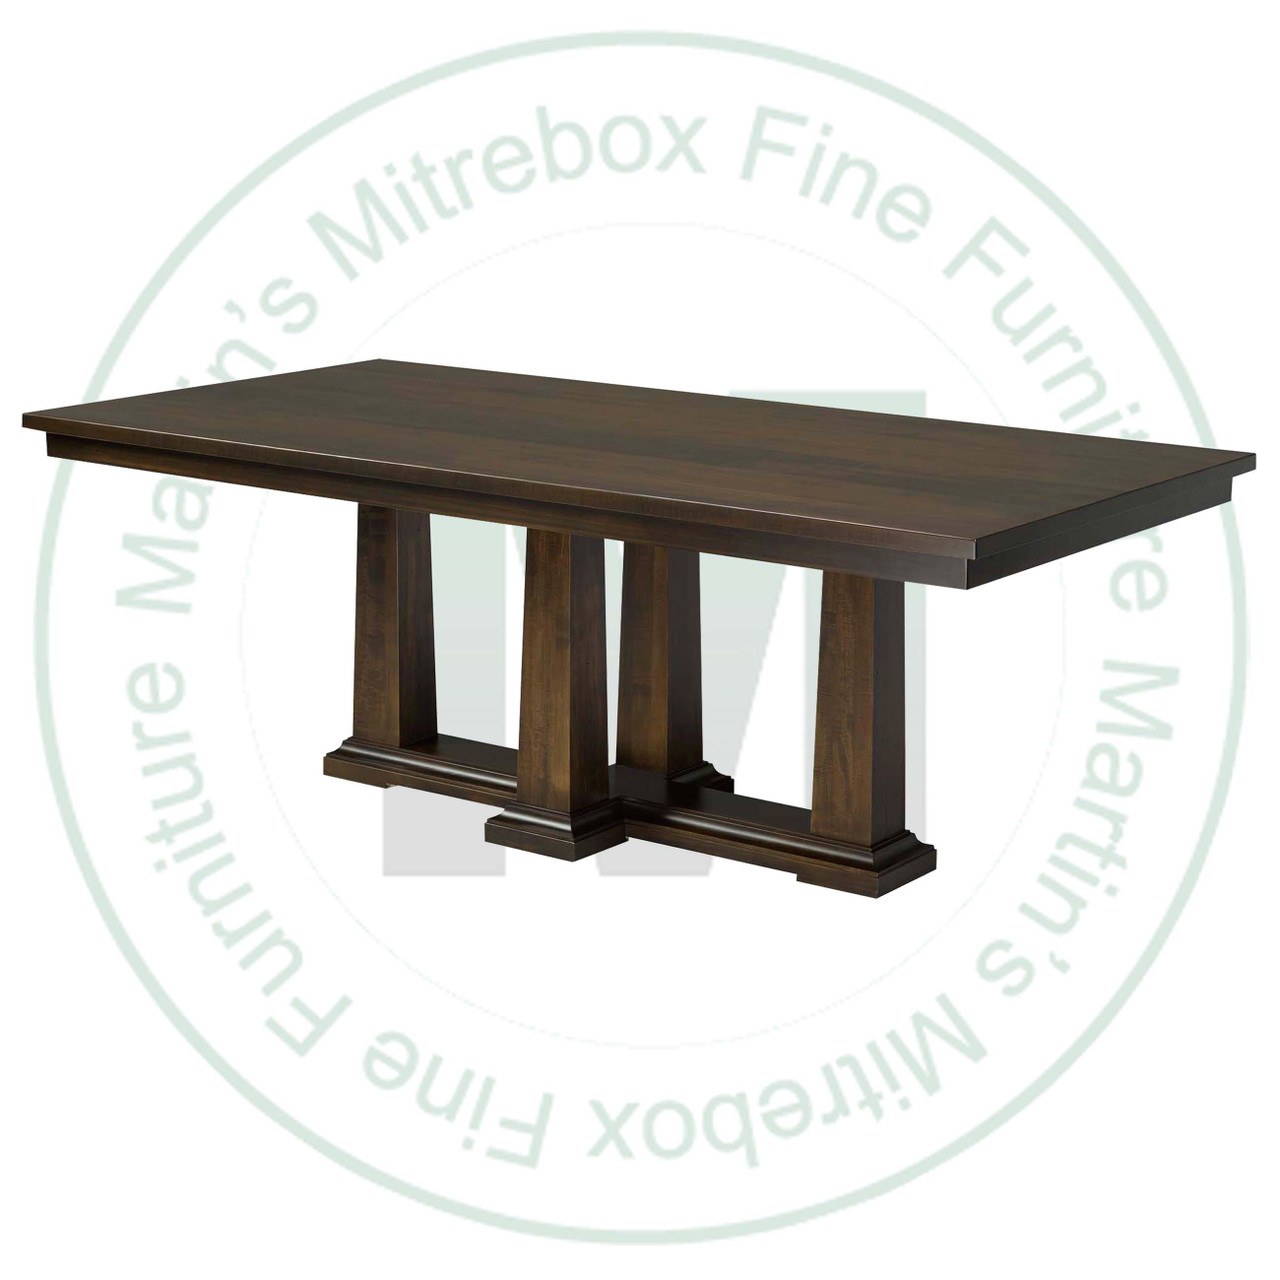 Oak Parthenon Double Pedestal Table 54''D x 84''W x 30''H Solid Top Table Has 1.75'' Thick Top